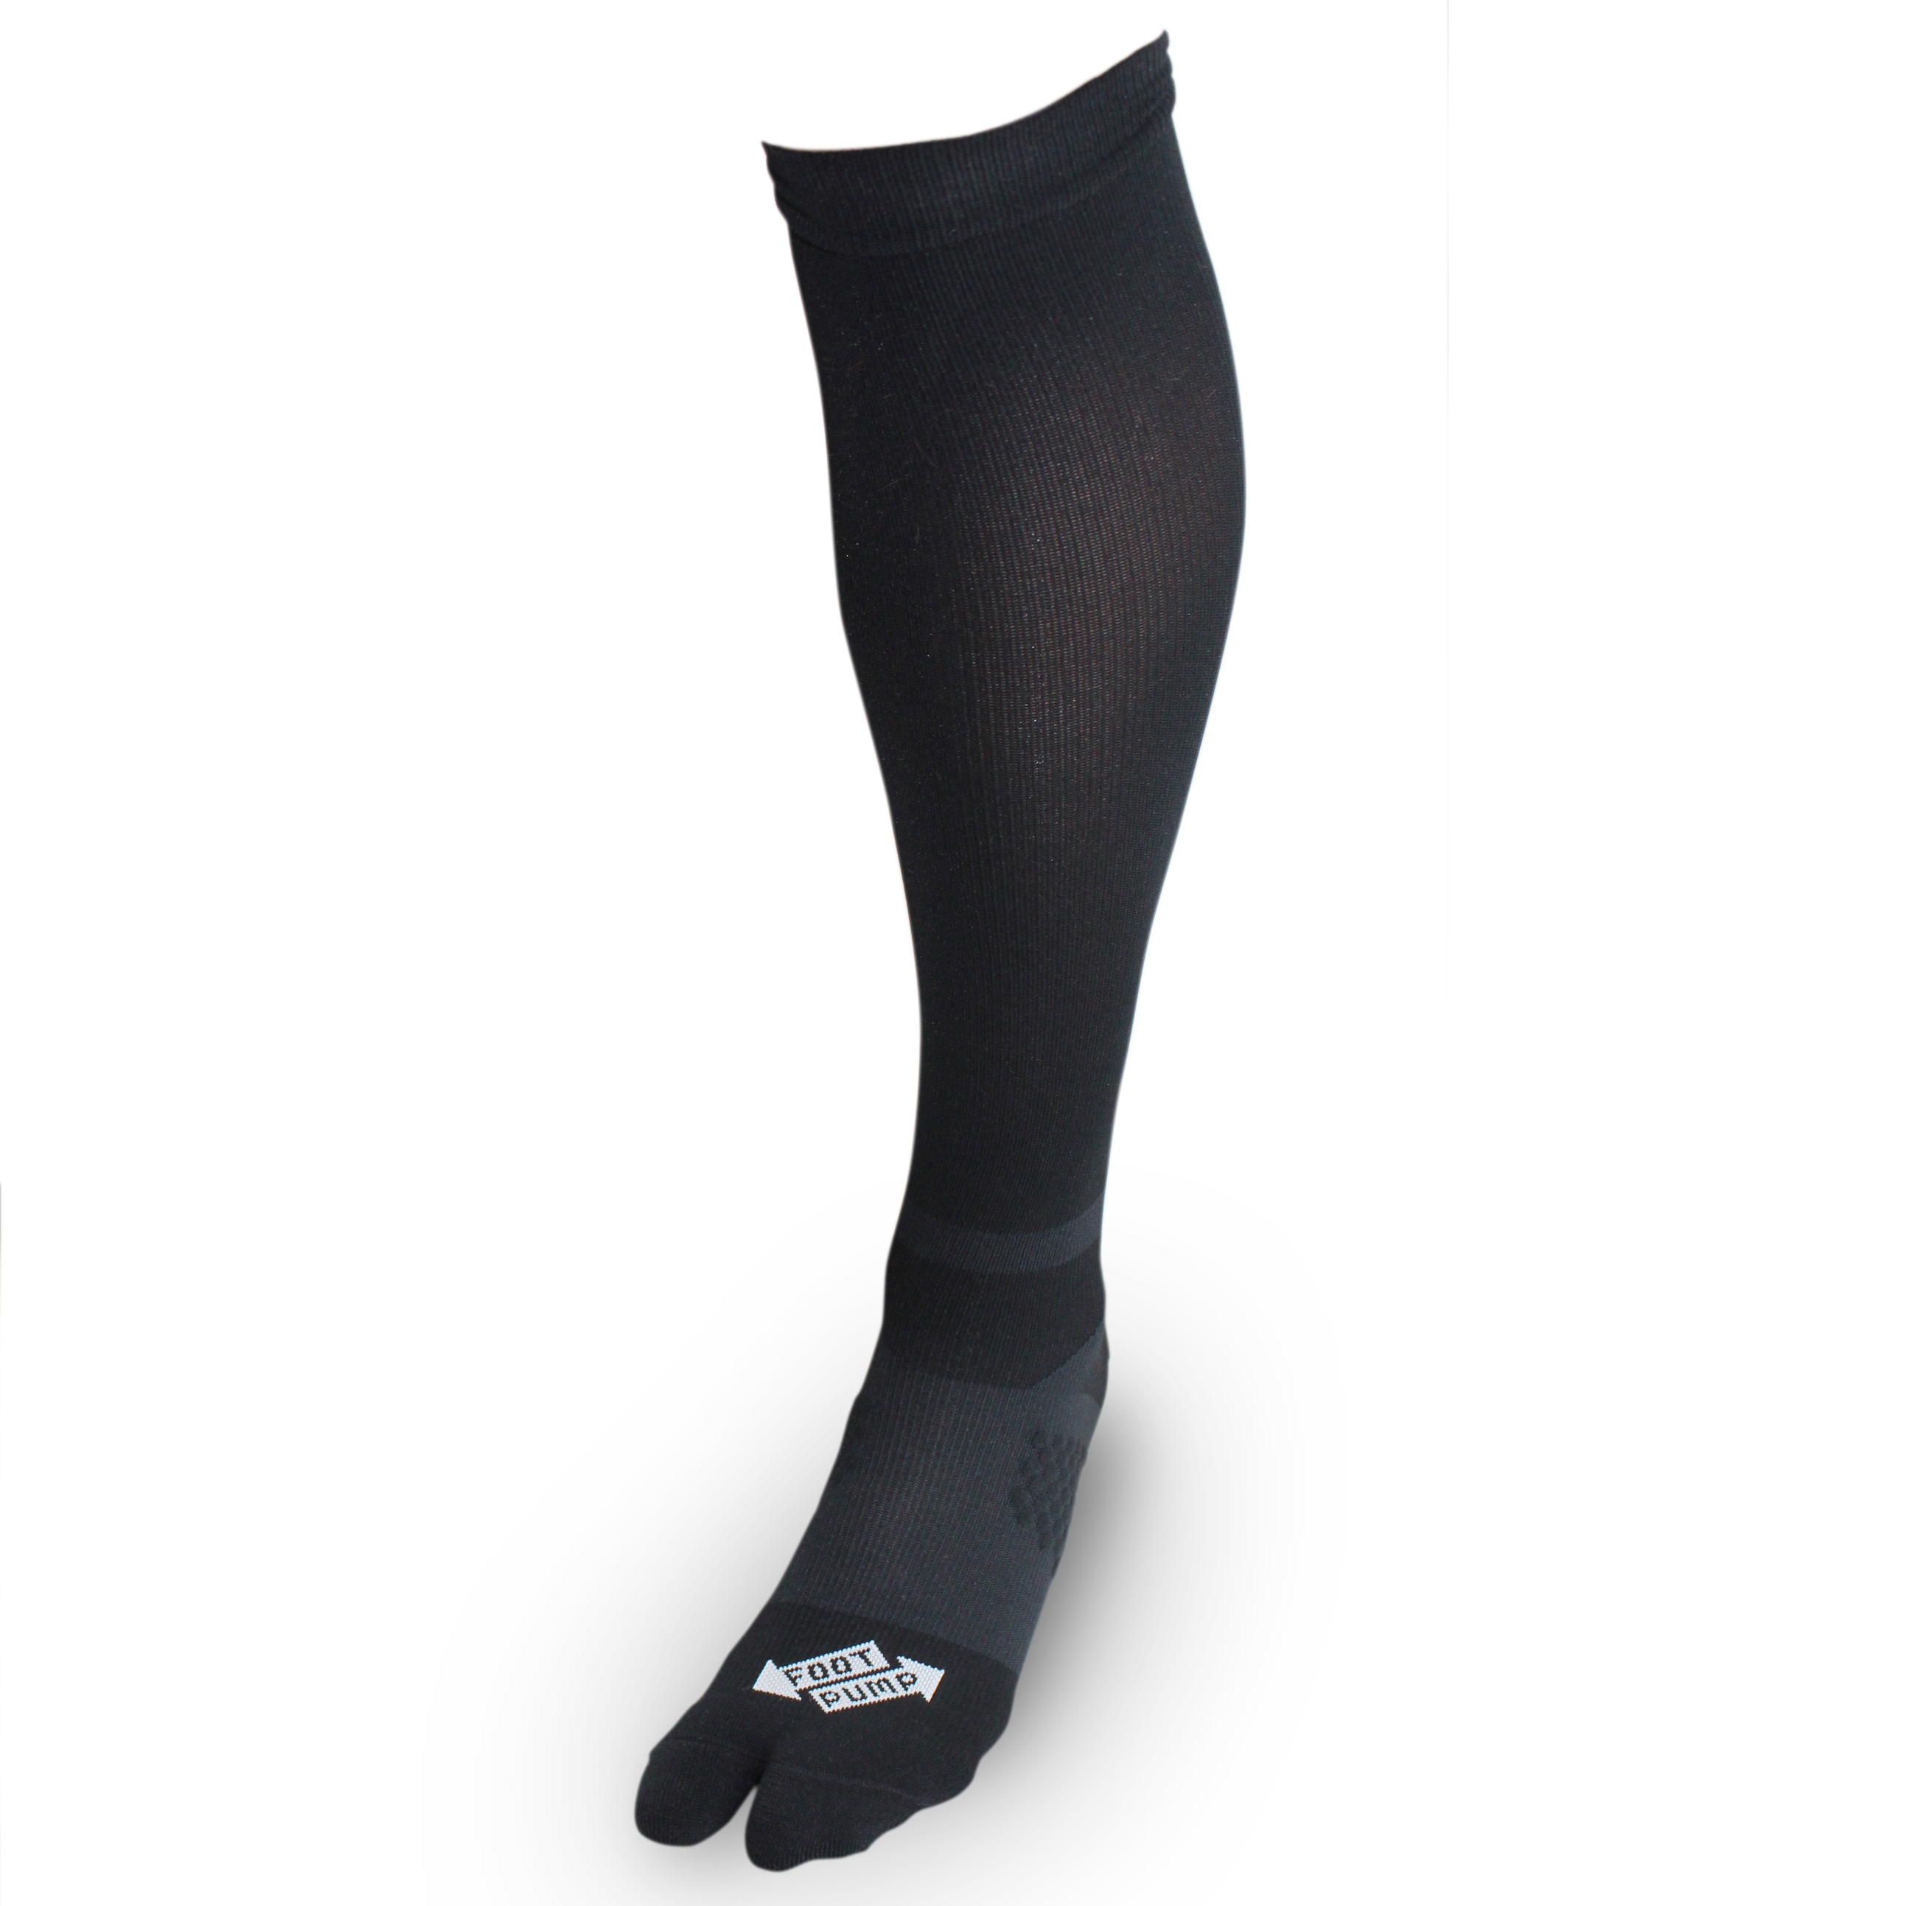 Foot Pump Sock - Calf Length - Insoles and Orthotics - Healthy Step